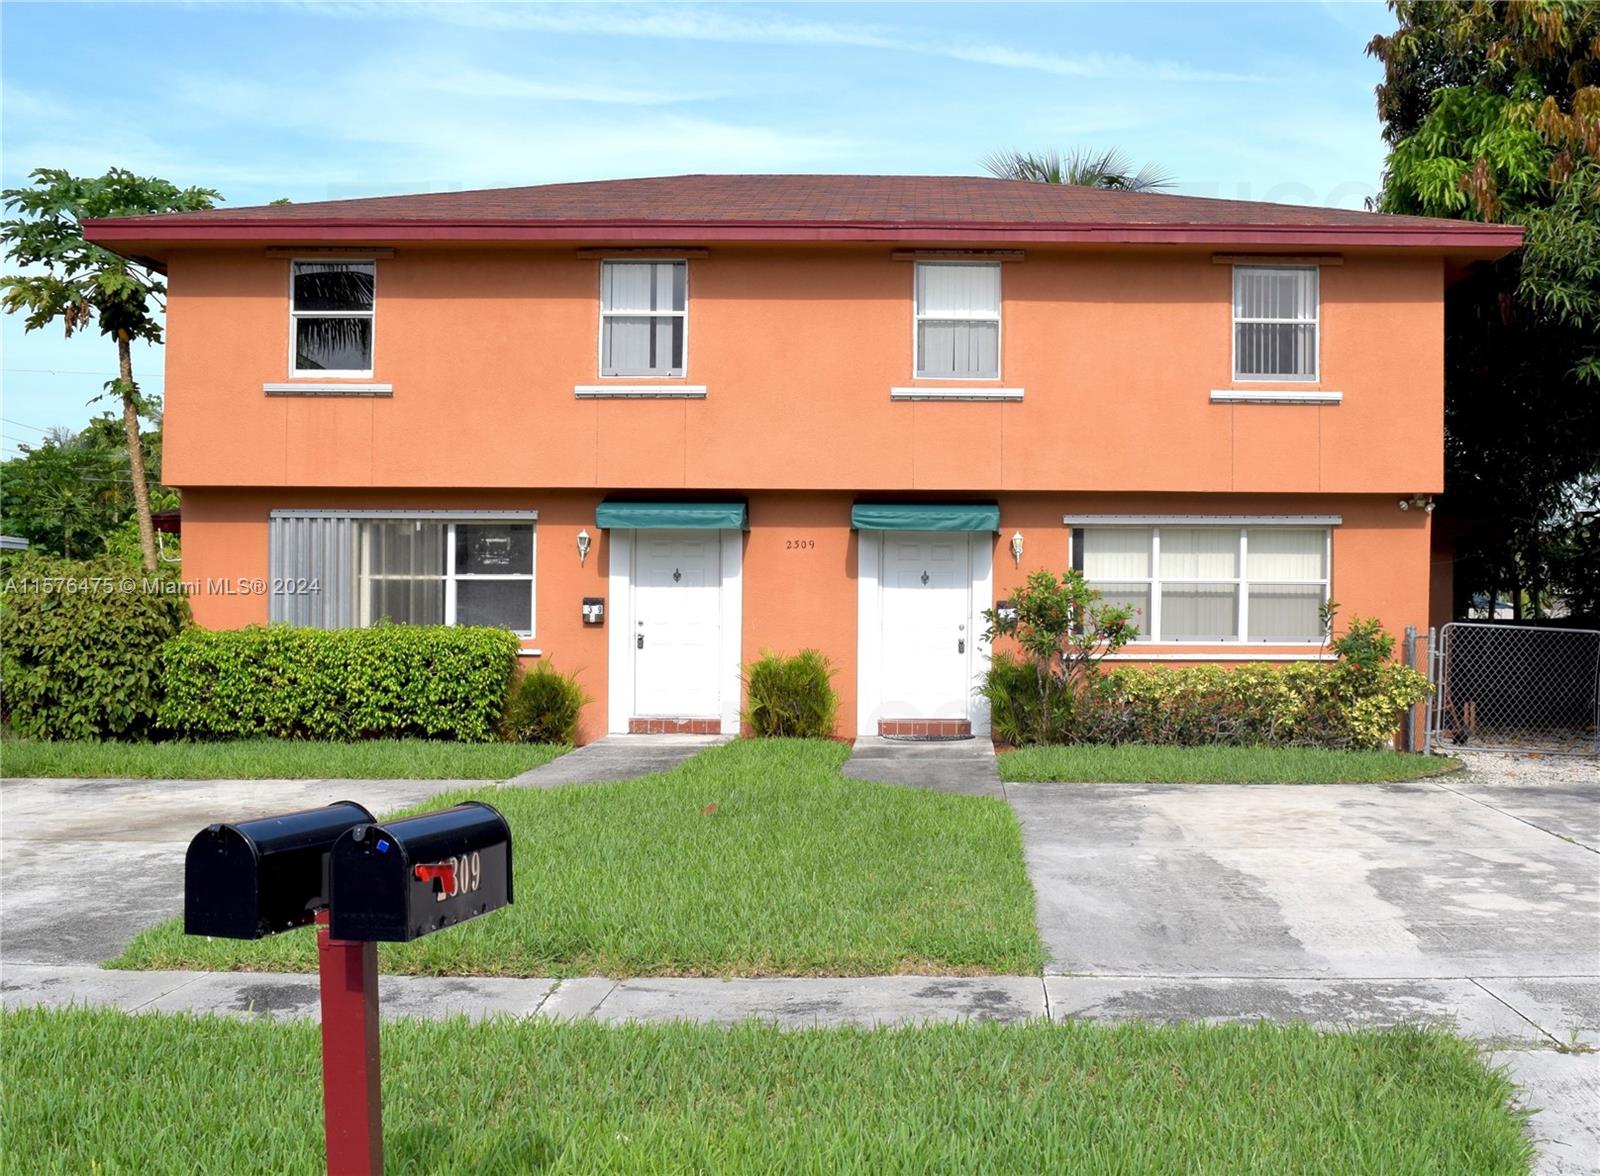 Rental Property at 2309 Se 2nd St S, Boynton Beach, Palm Beach County, Florida - Bedrooms: 3 
Bathrooms: 2  - $2,495 MO.